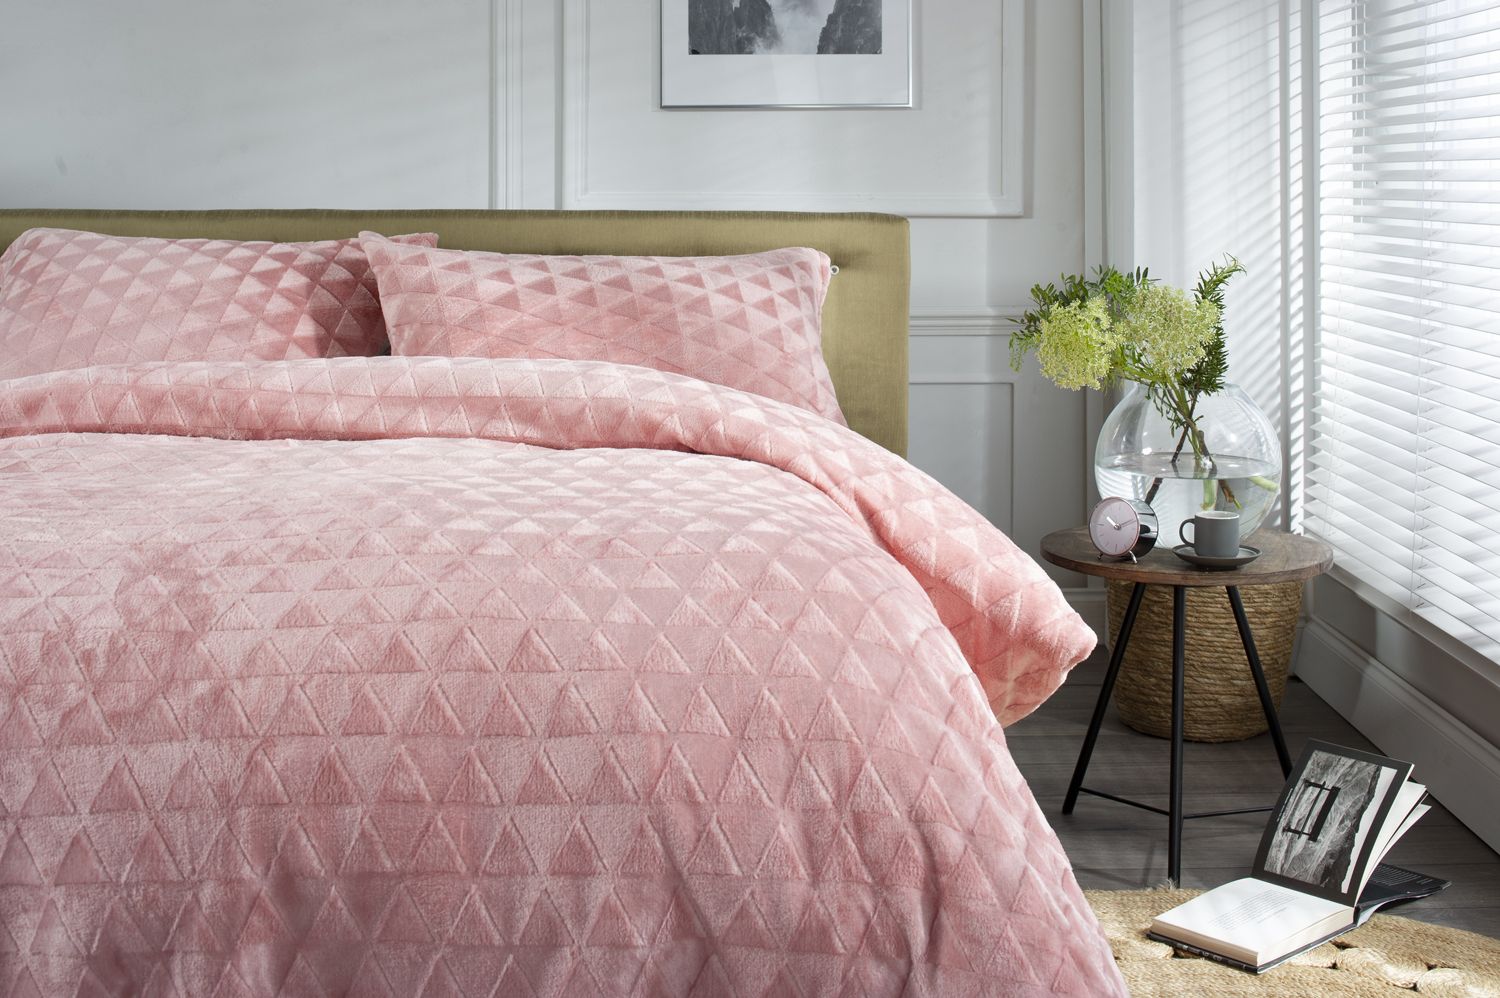 The Lyndon Company Alexandria  Duvet Set Single Size Pink Fleece - 135x200cm - 100% Polyester